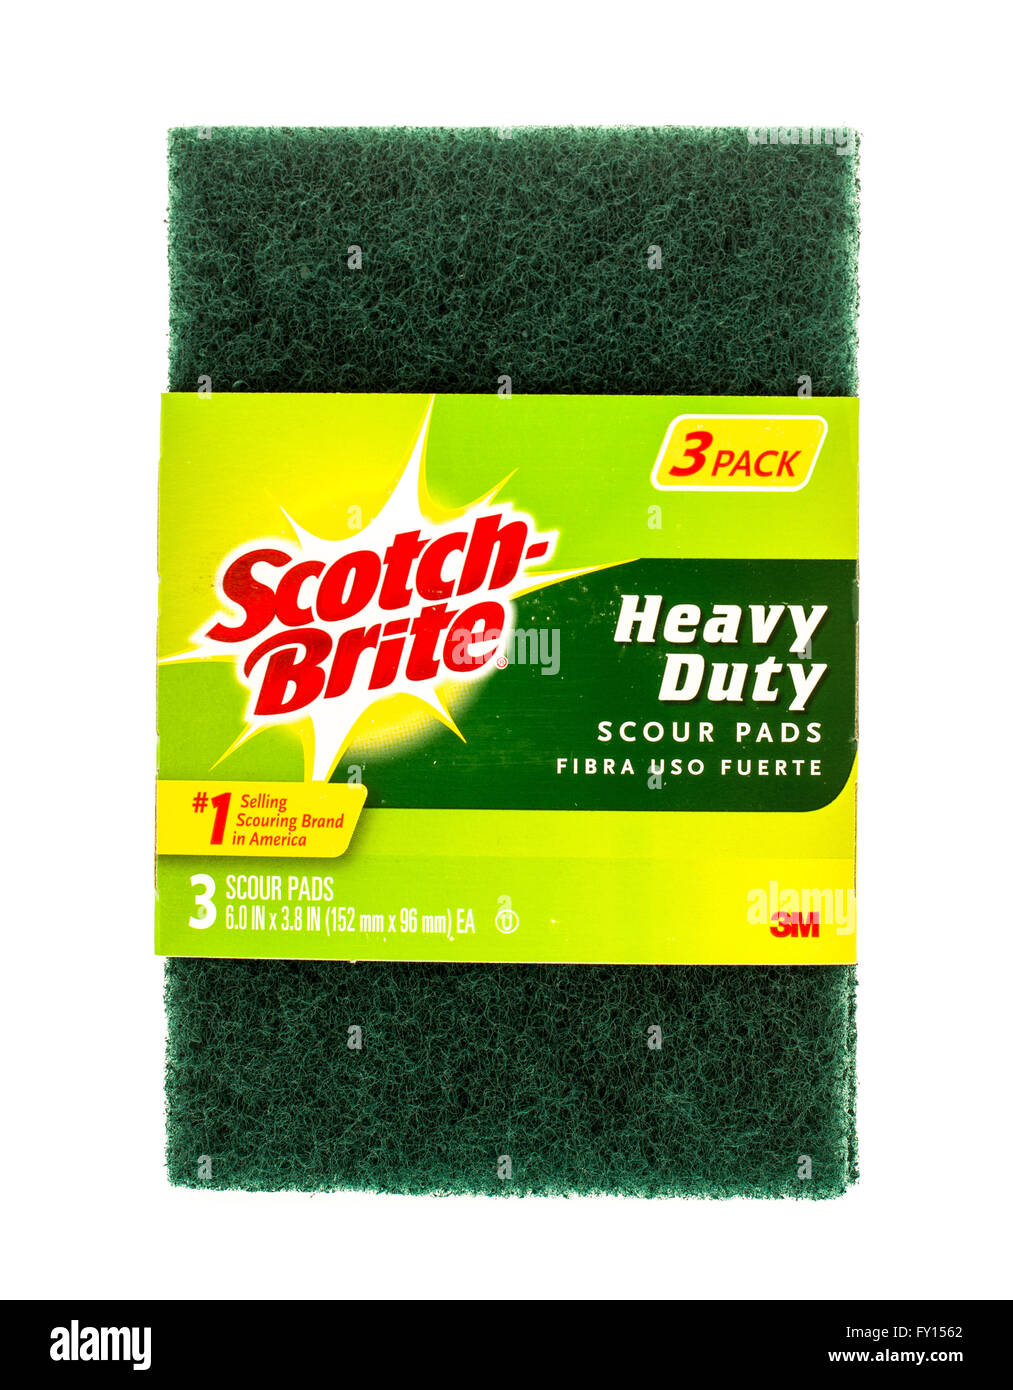 Winneconne, WI -19 sept 2015: Paquete de scotch brite heavy duty decapar las pastillas. Foto de stock